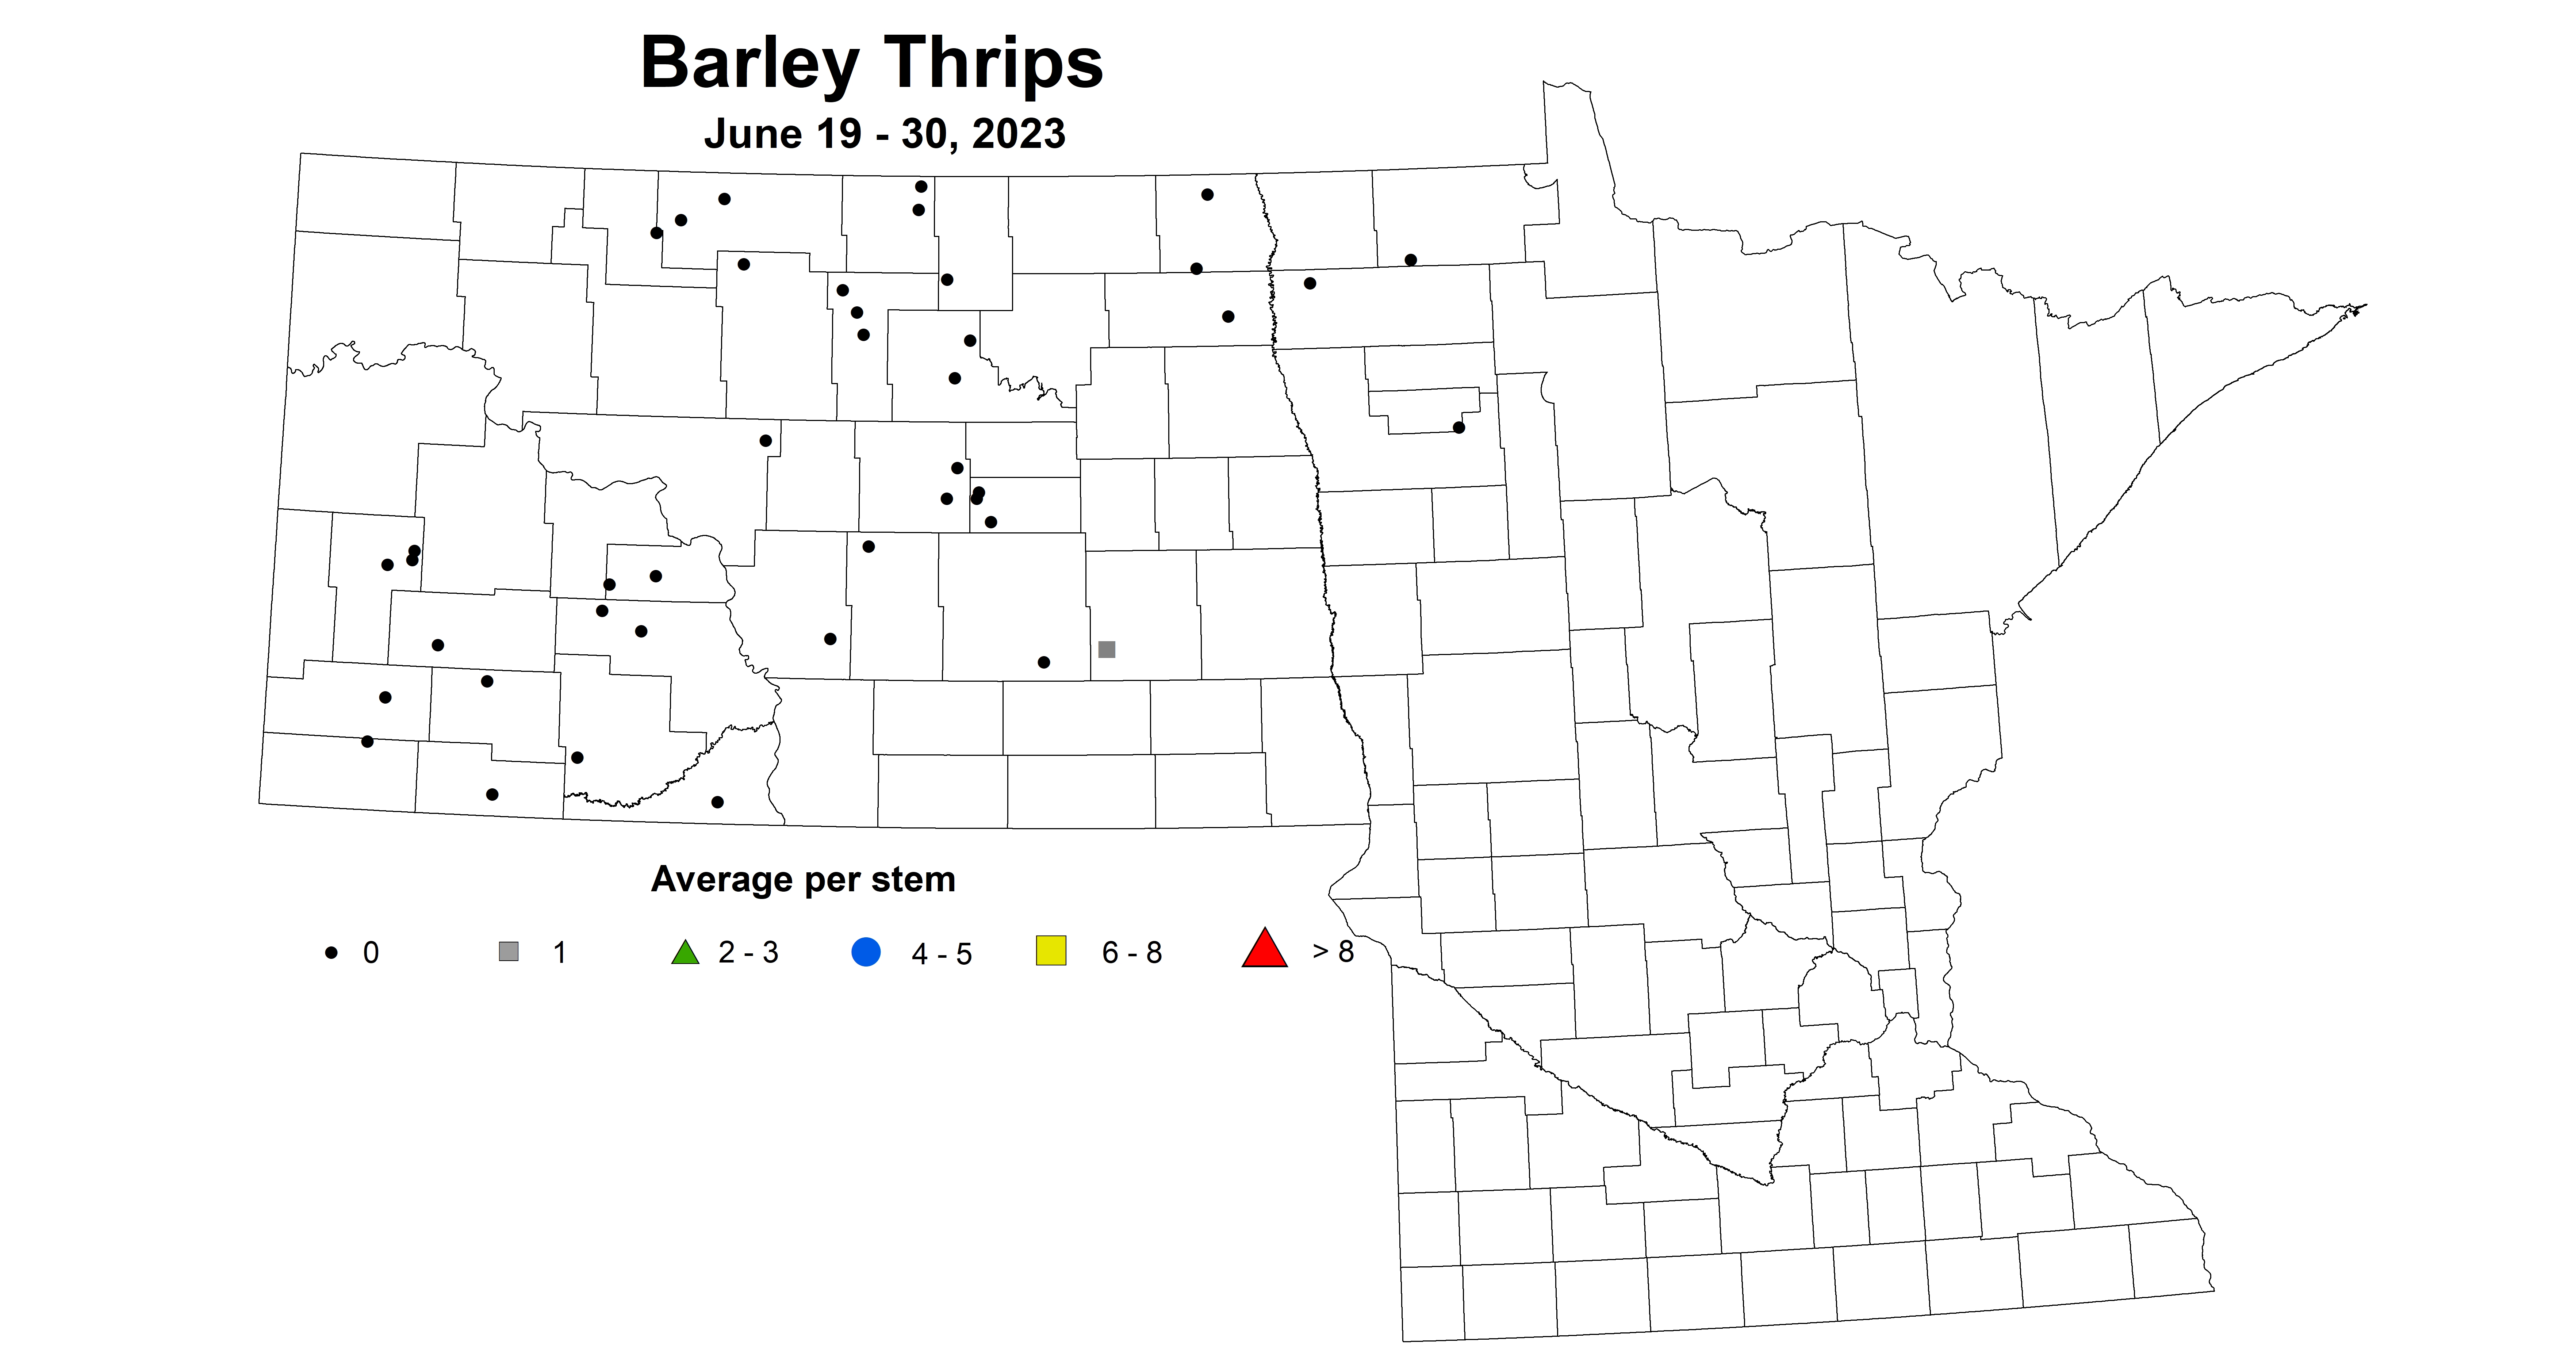 barley thrips June 19-30 2023